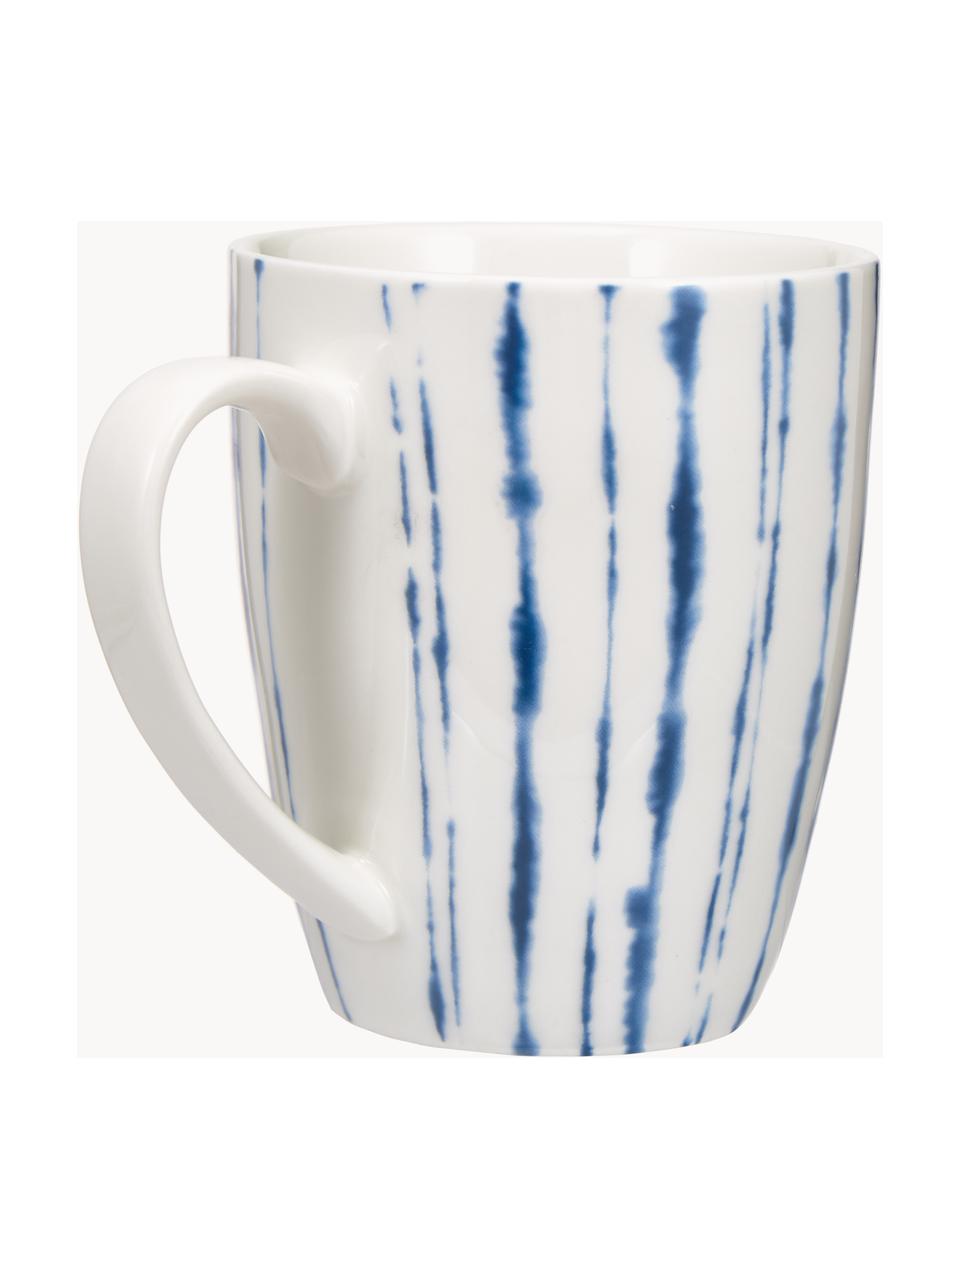 Tazze caffè in porcellana con decoro acquarello Amaya 2 pz, Porcellana, Bianco crema, blu scuro, Ø 8 x Alt. 10 cm, 350 ml